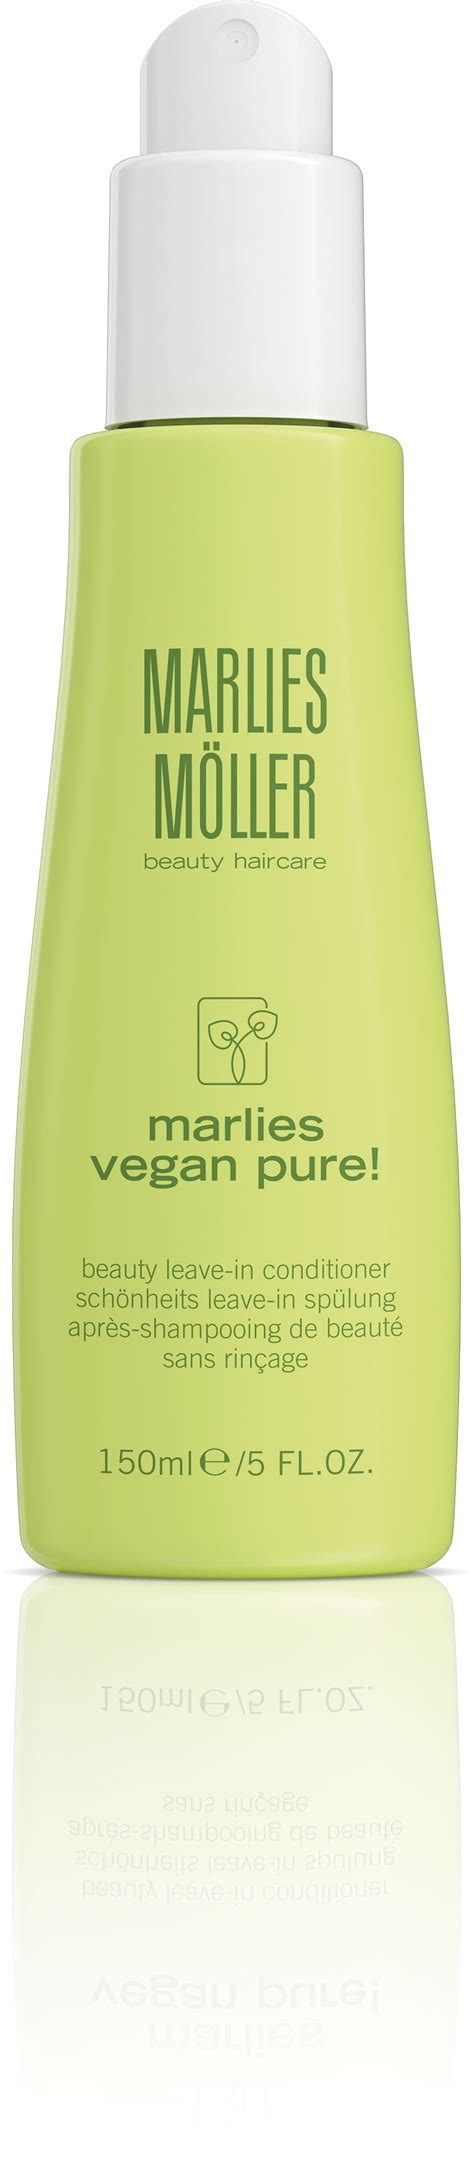 Marlies M Ller Vegan Pure Beauty Leave In Conditioner Vegan Pure